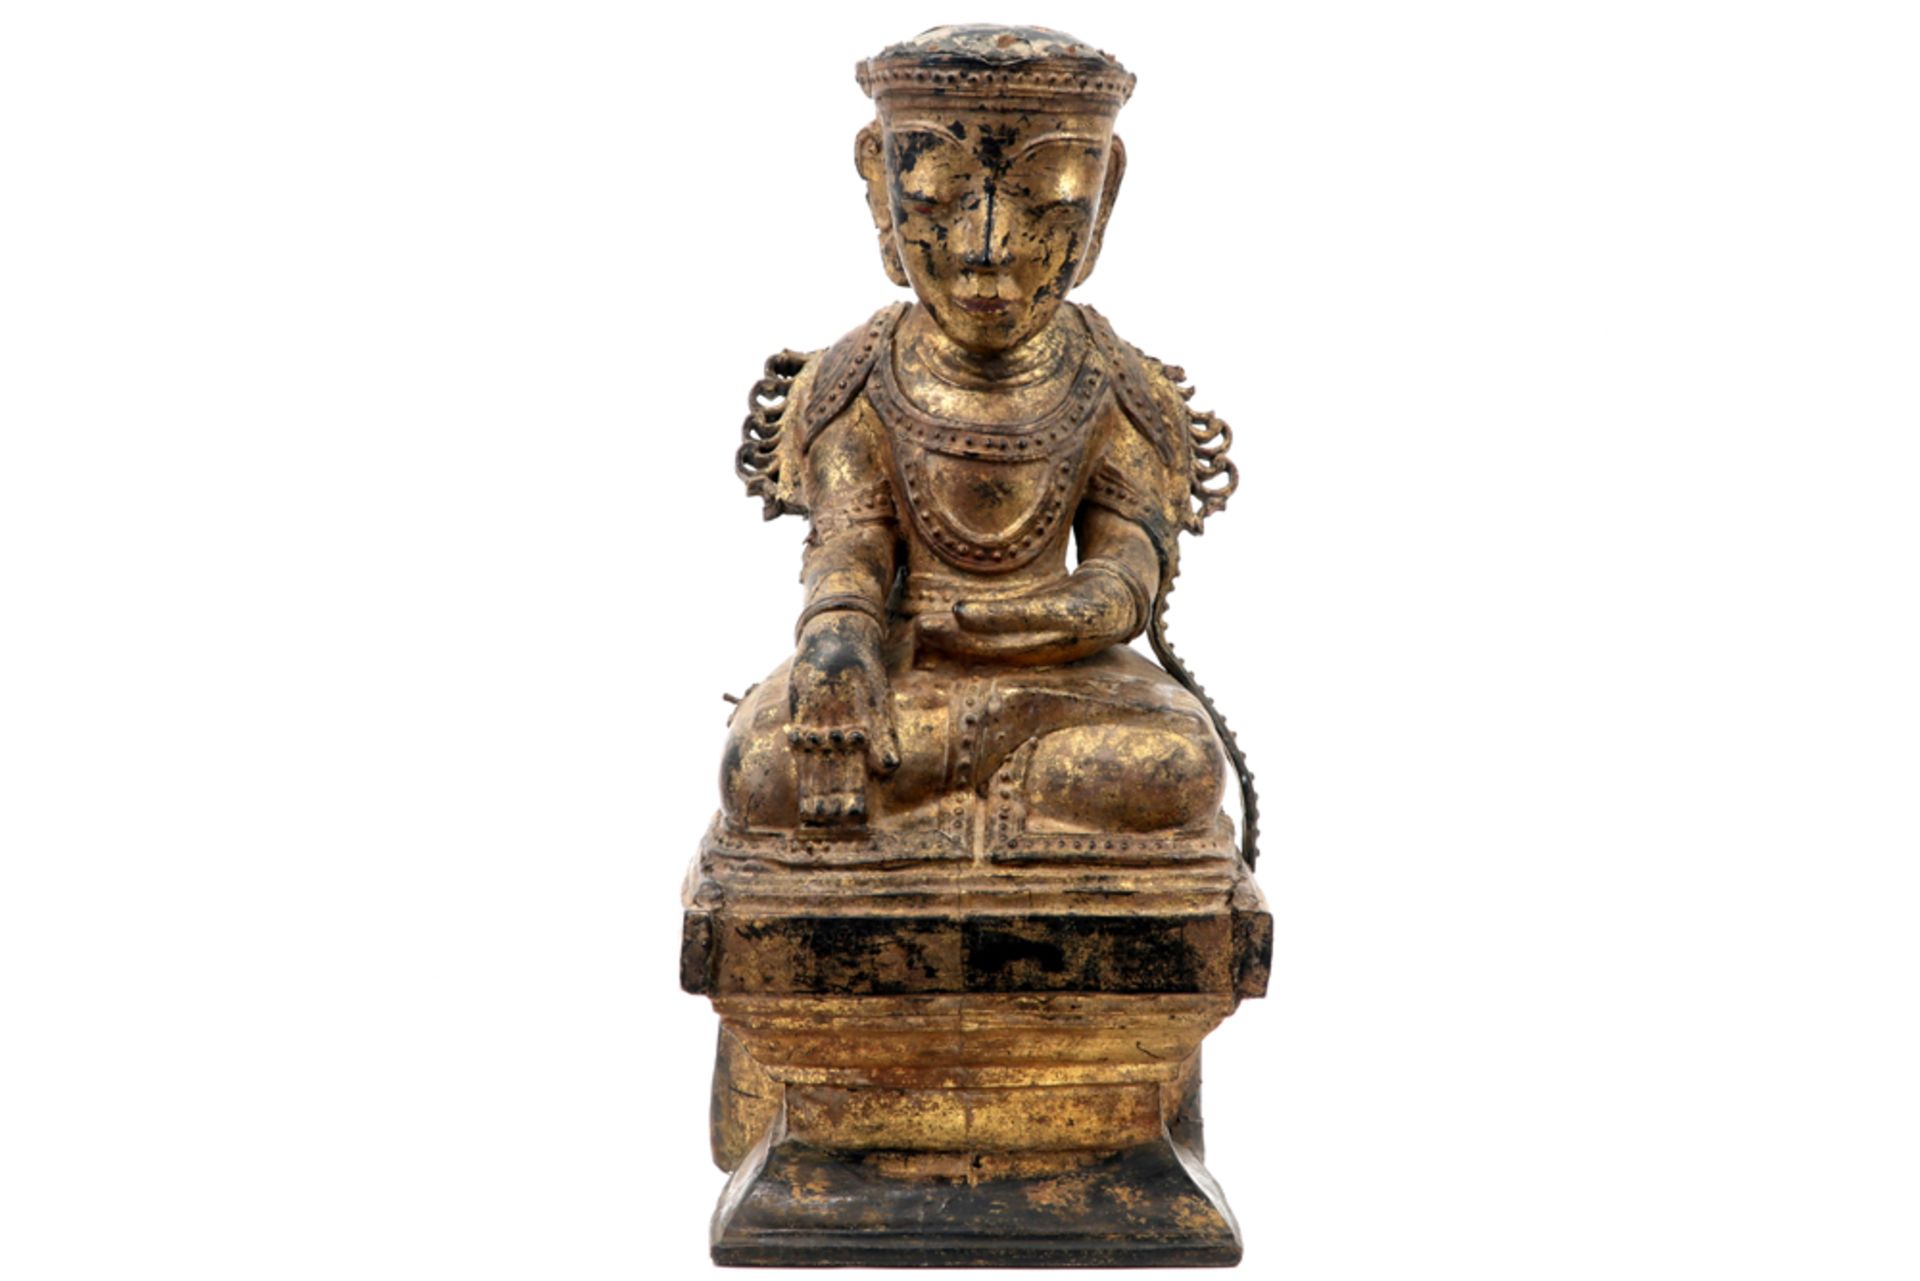 19th Cent. Siamese Rattanakosin period "Buddha" sculpture in gilded wood || THAILAND - RATTAKOSIN